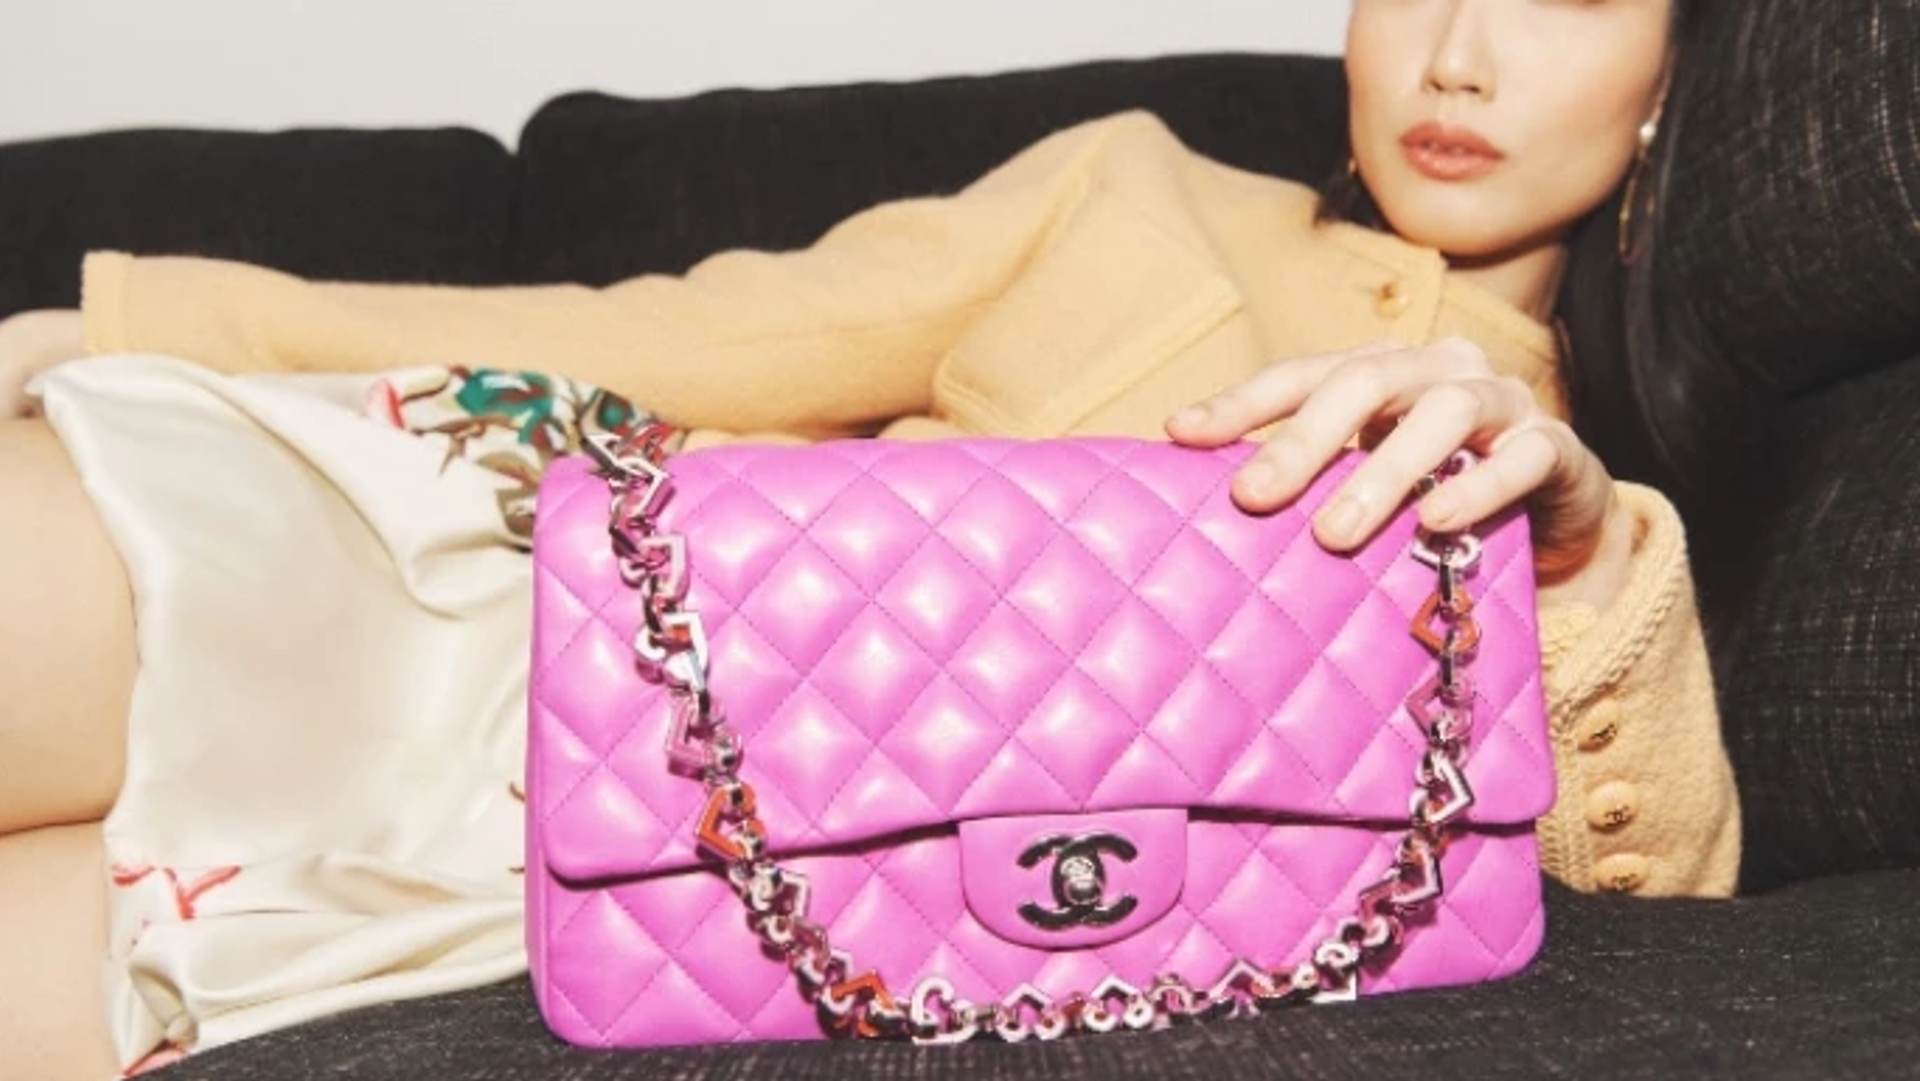 How craftsmanship determines the value of luxury handbags